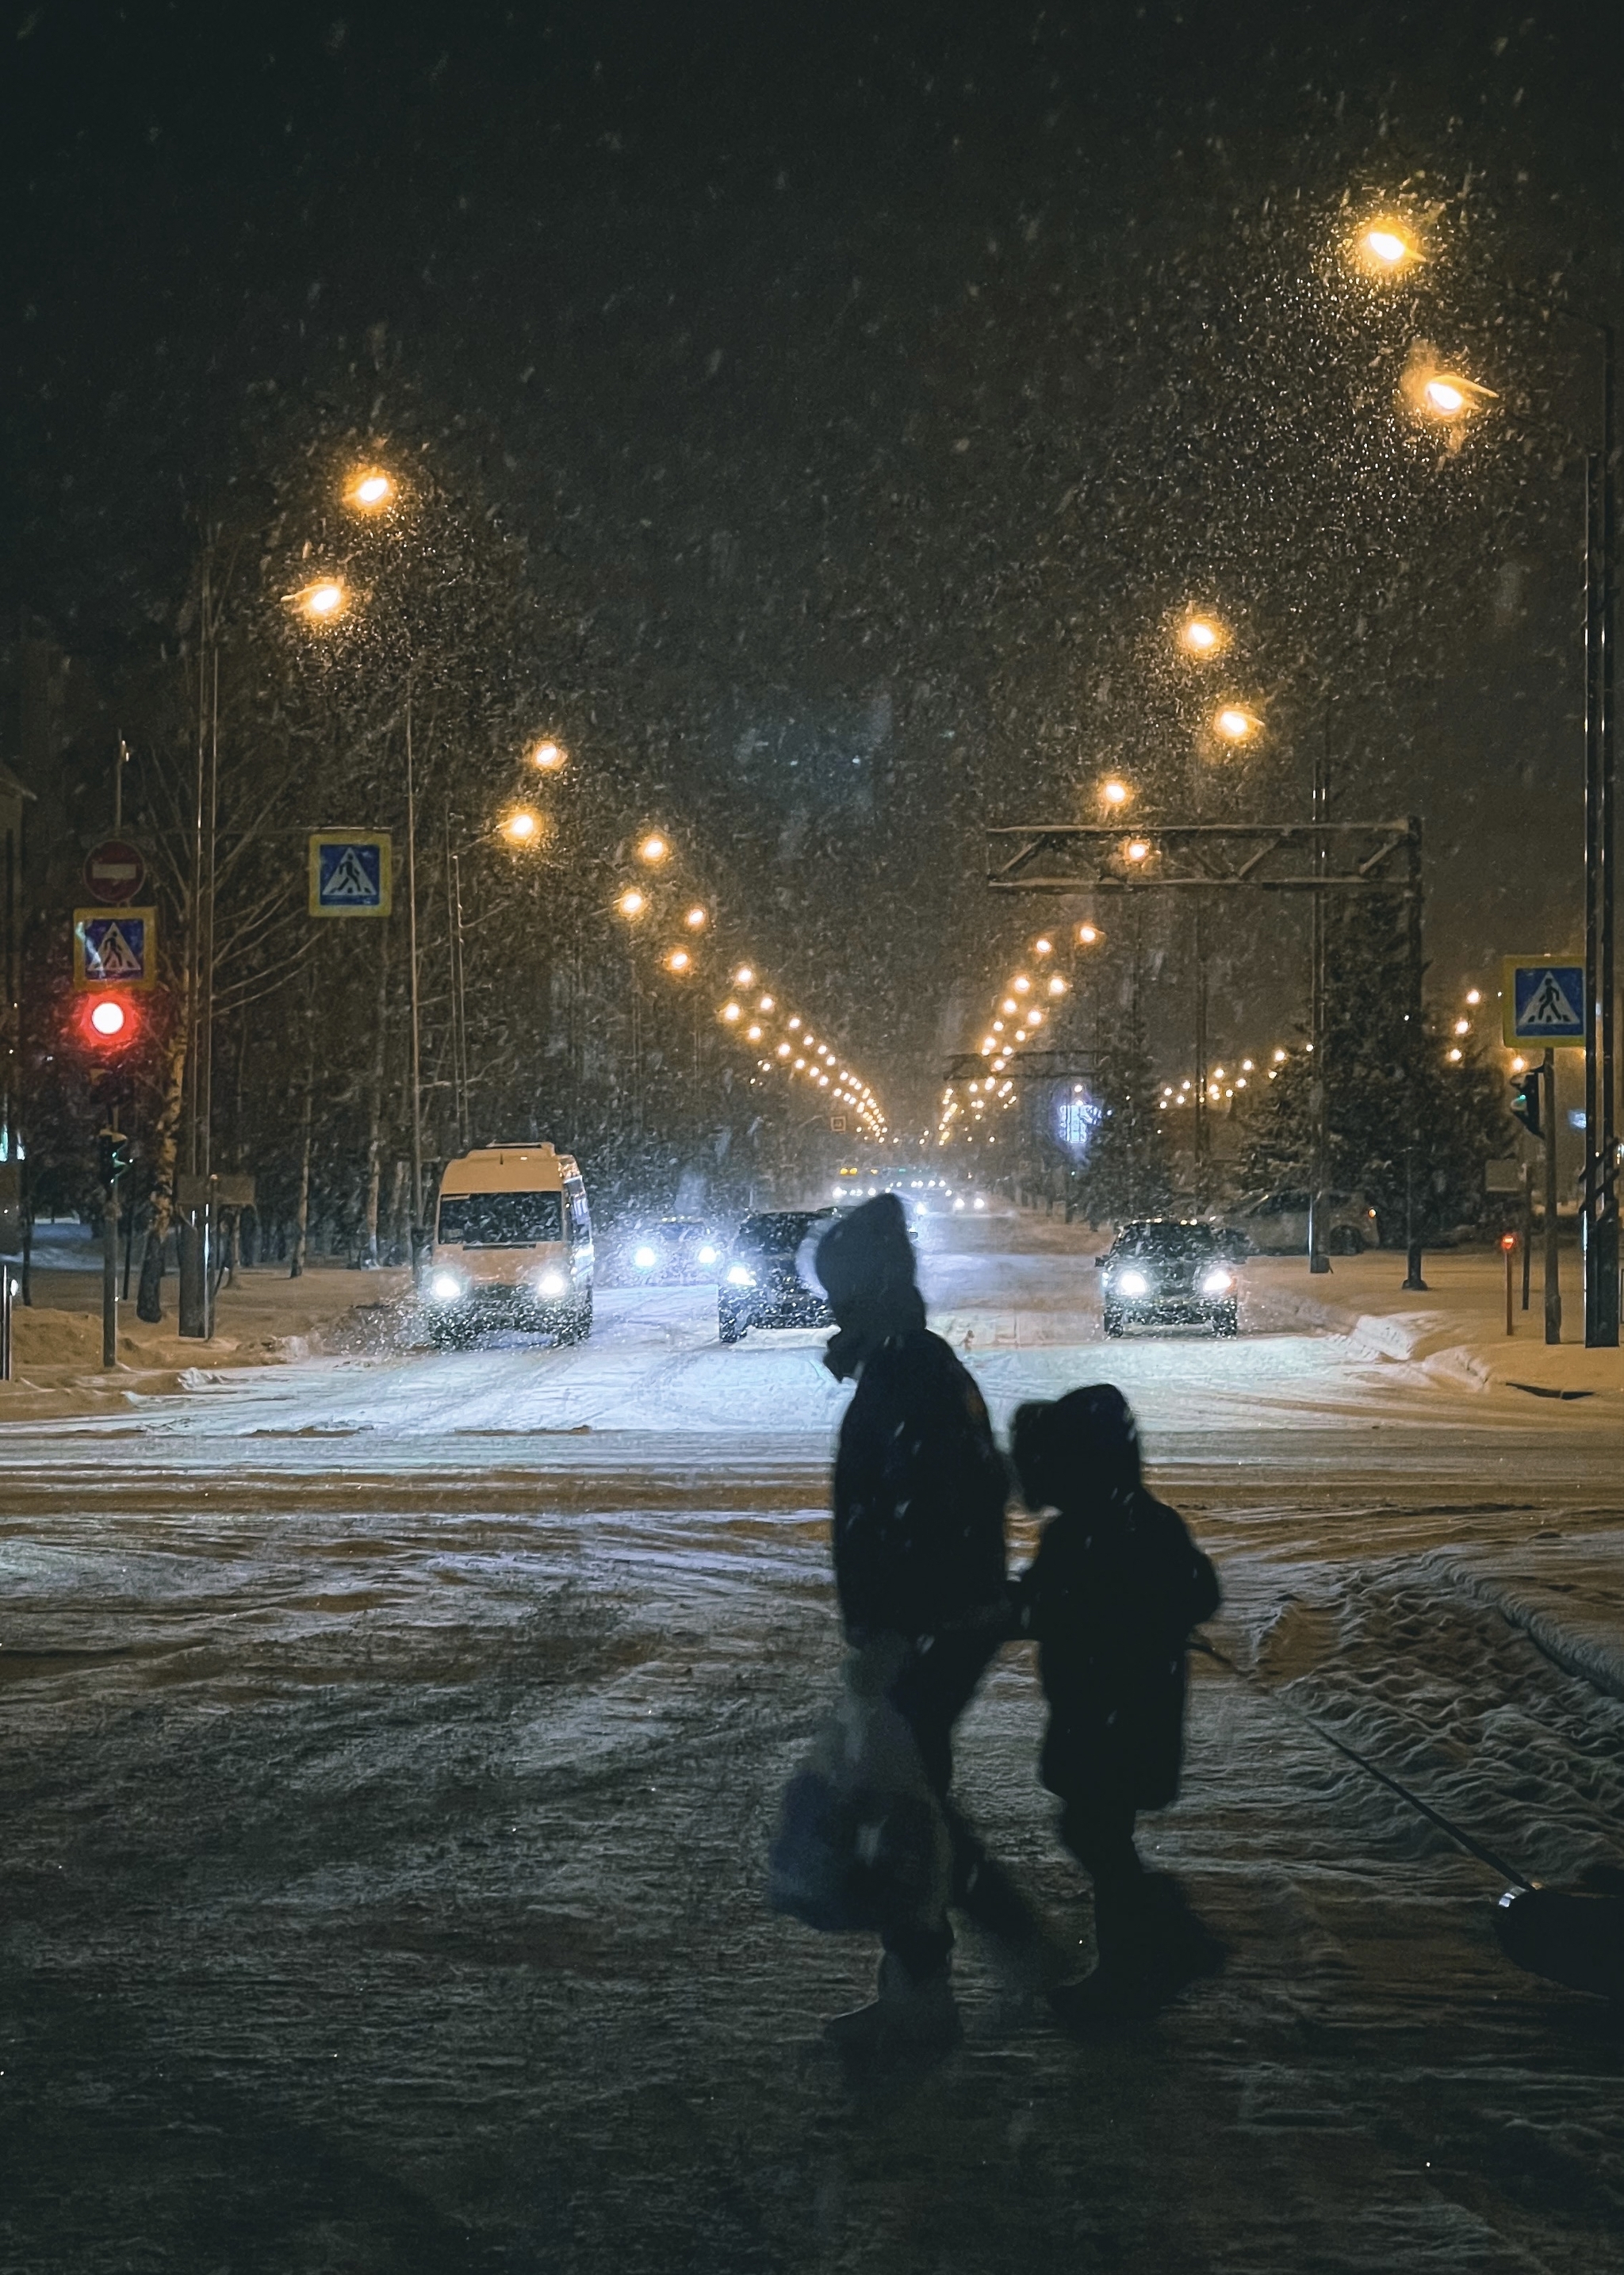 Pedestrians - My, Winter, A pedestrian, Mobile photography, Evening, Snow, Snowfall, Lamp, Night city, Lightroom